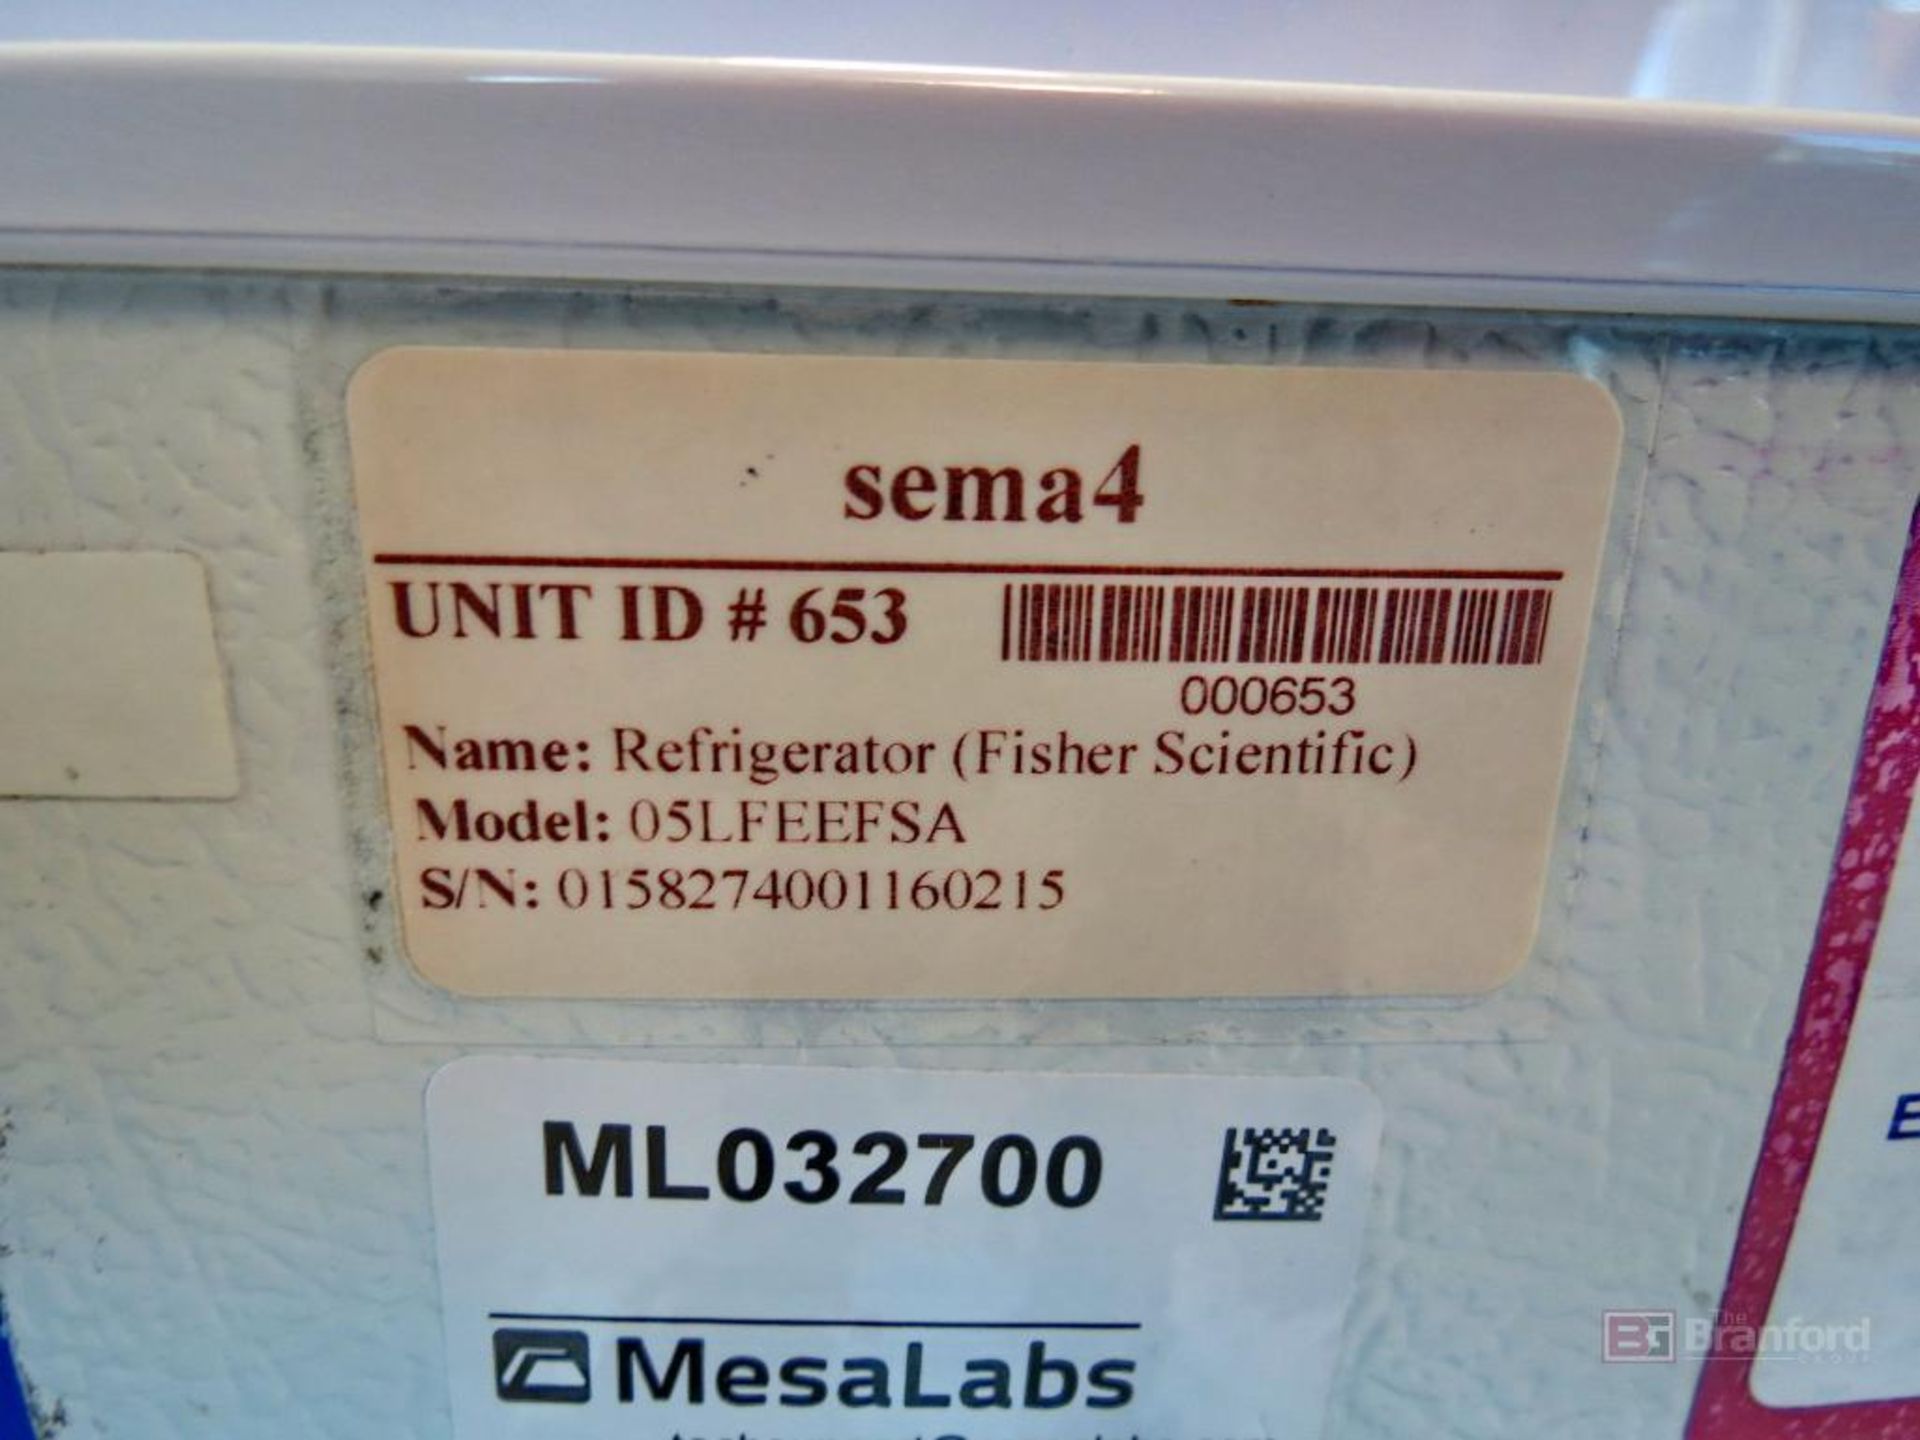 Fisher Scientific 05LFEEFSA Refrigerator - Image 3 of 3